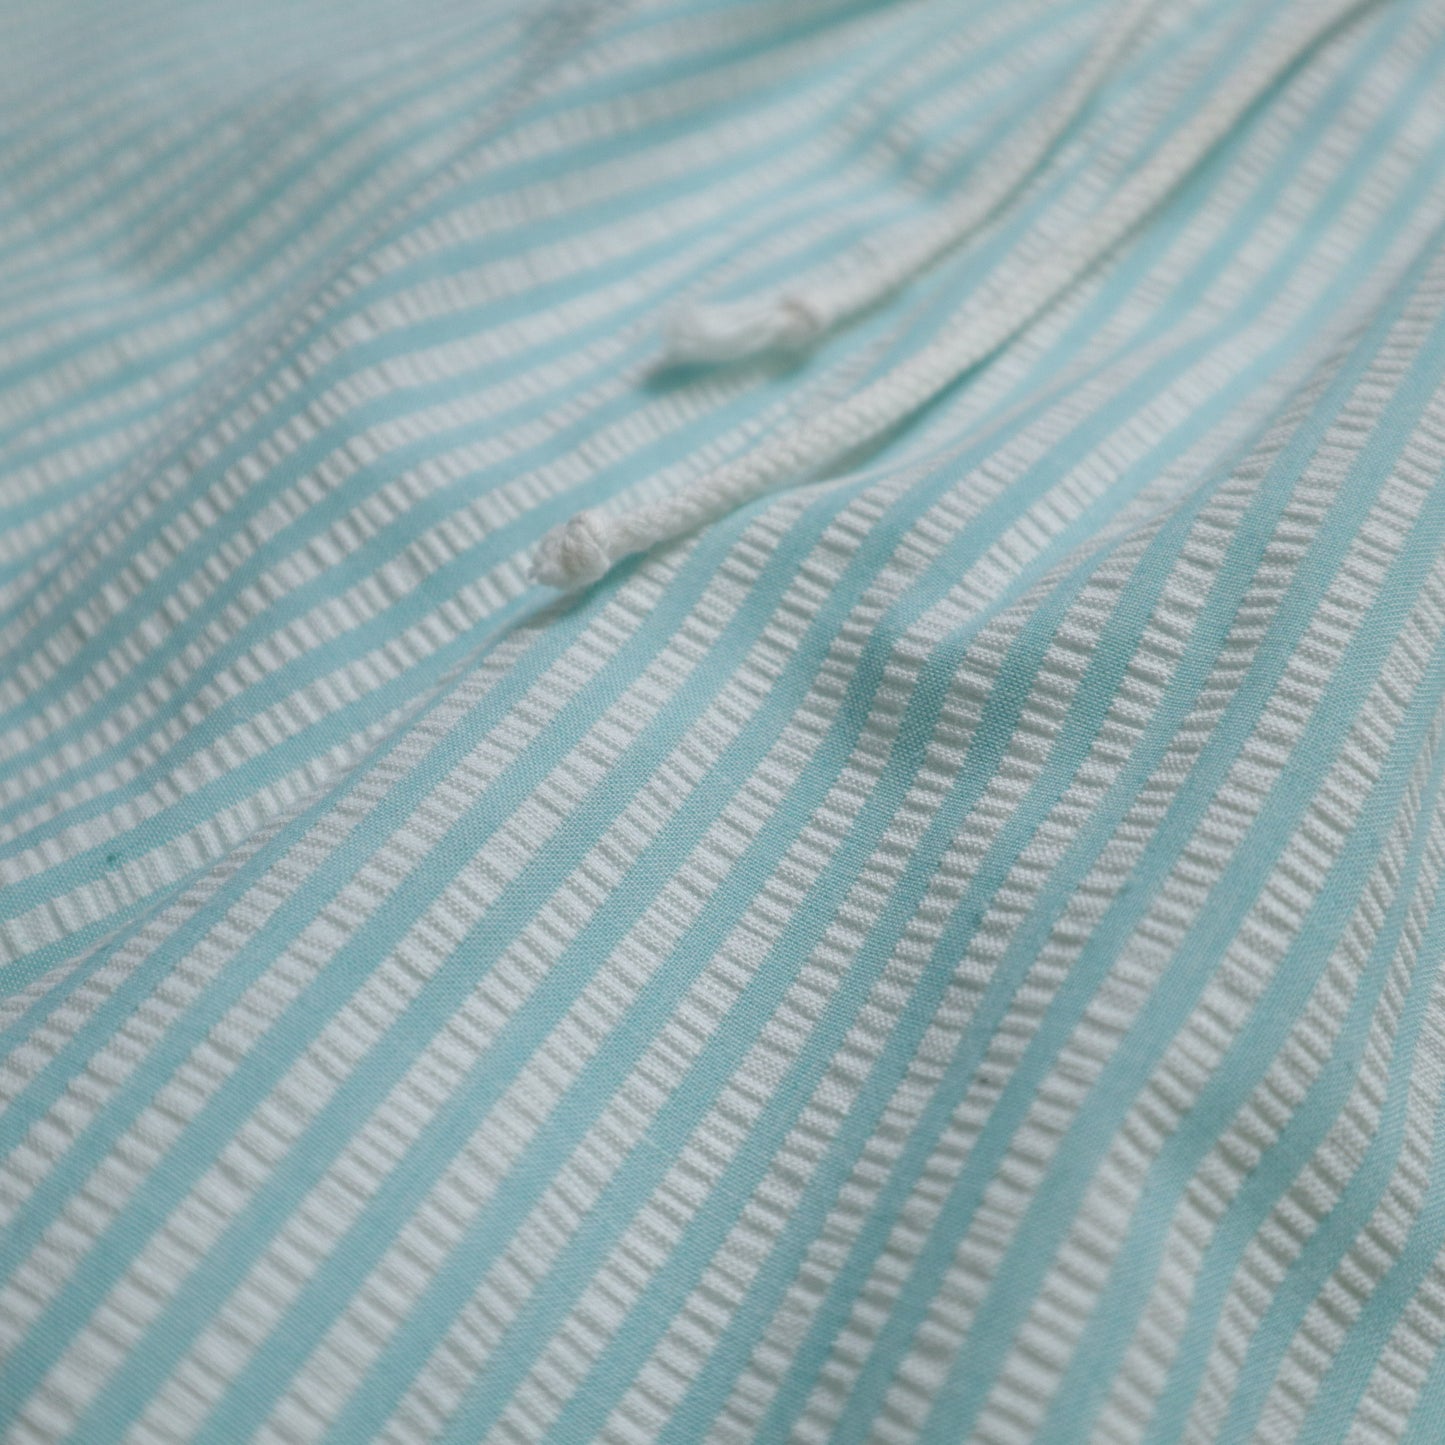 1980s 美國製 藍白立體條紋短褲